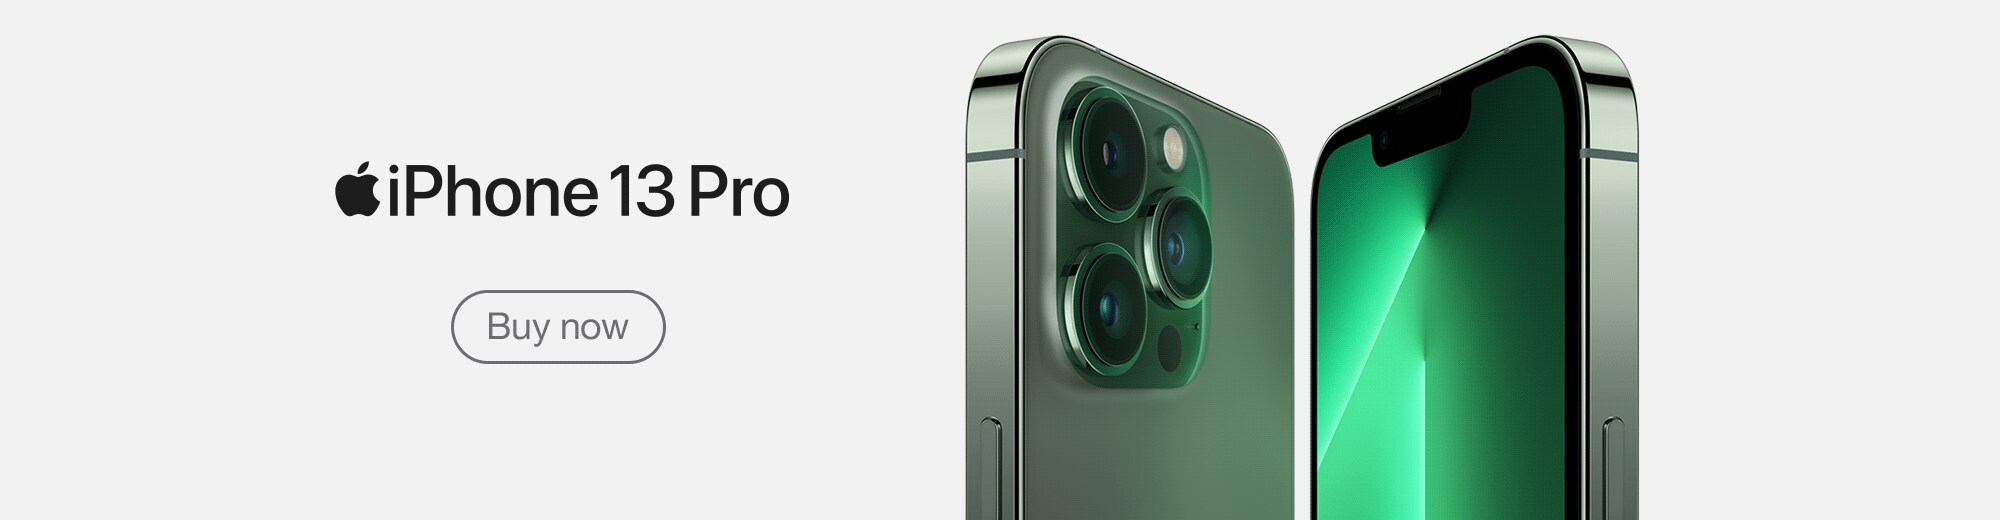 iPhone 13 Pro  Now in Alpine Green.  Buy now